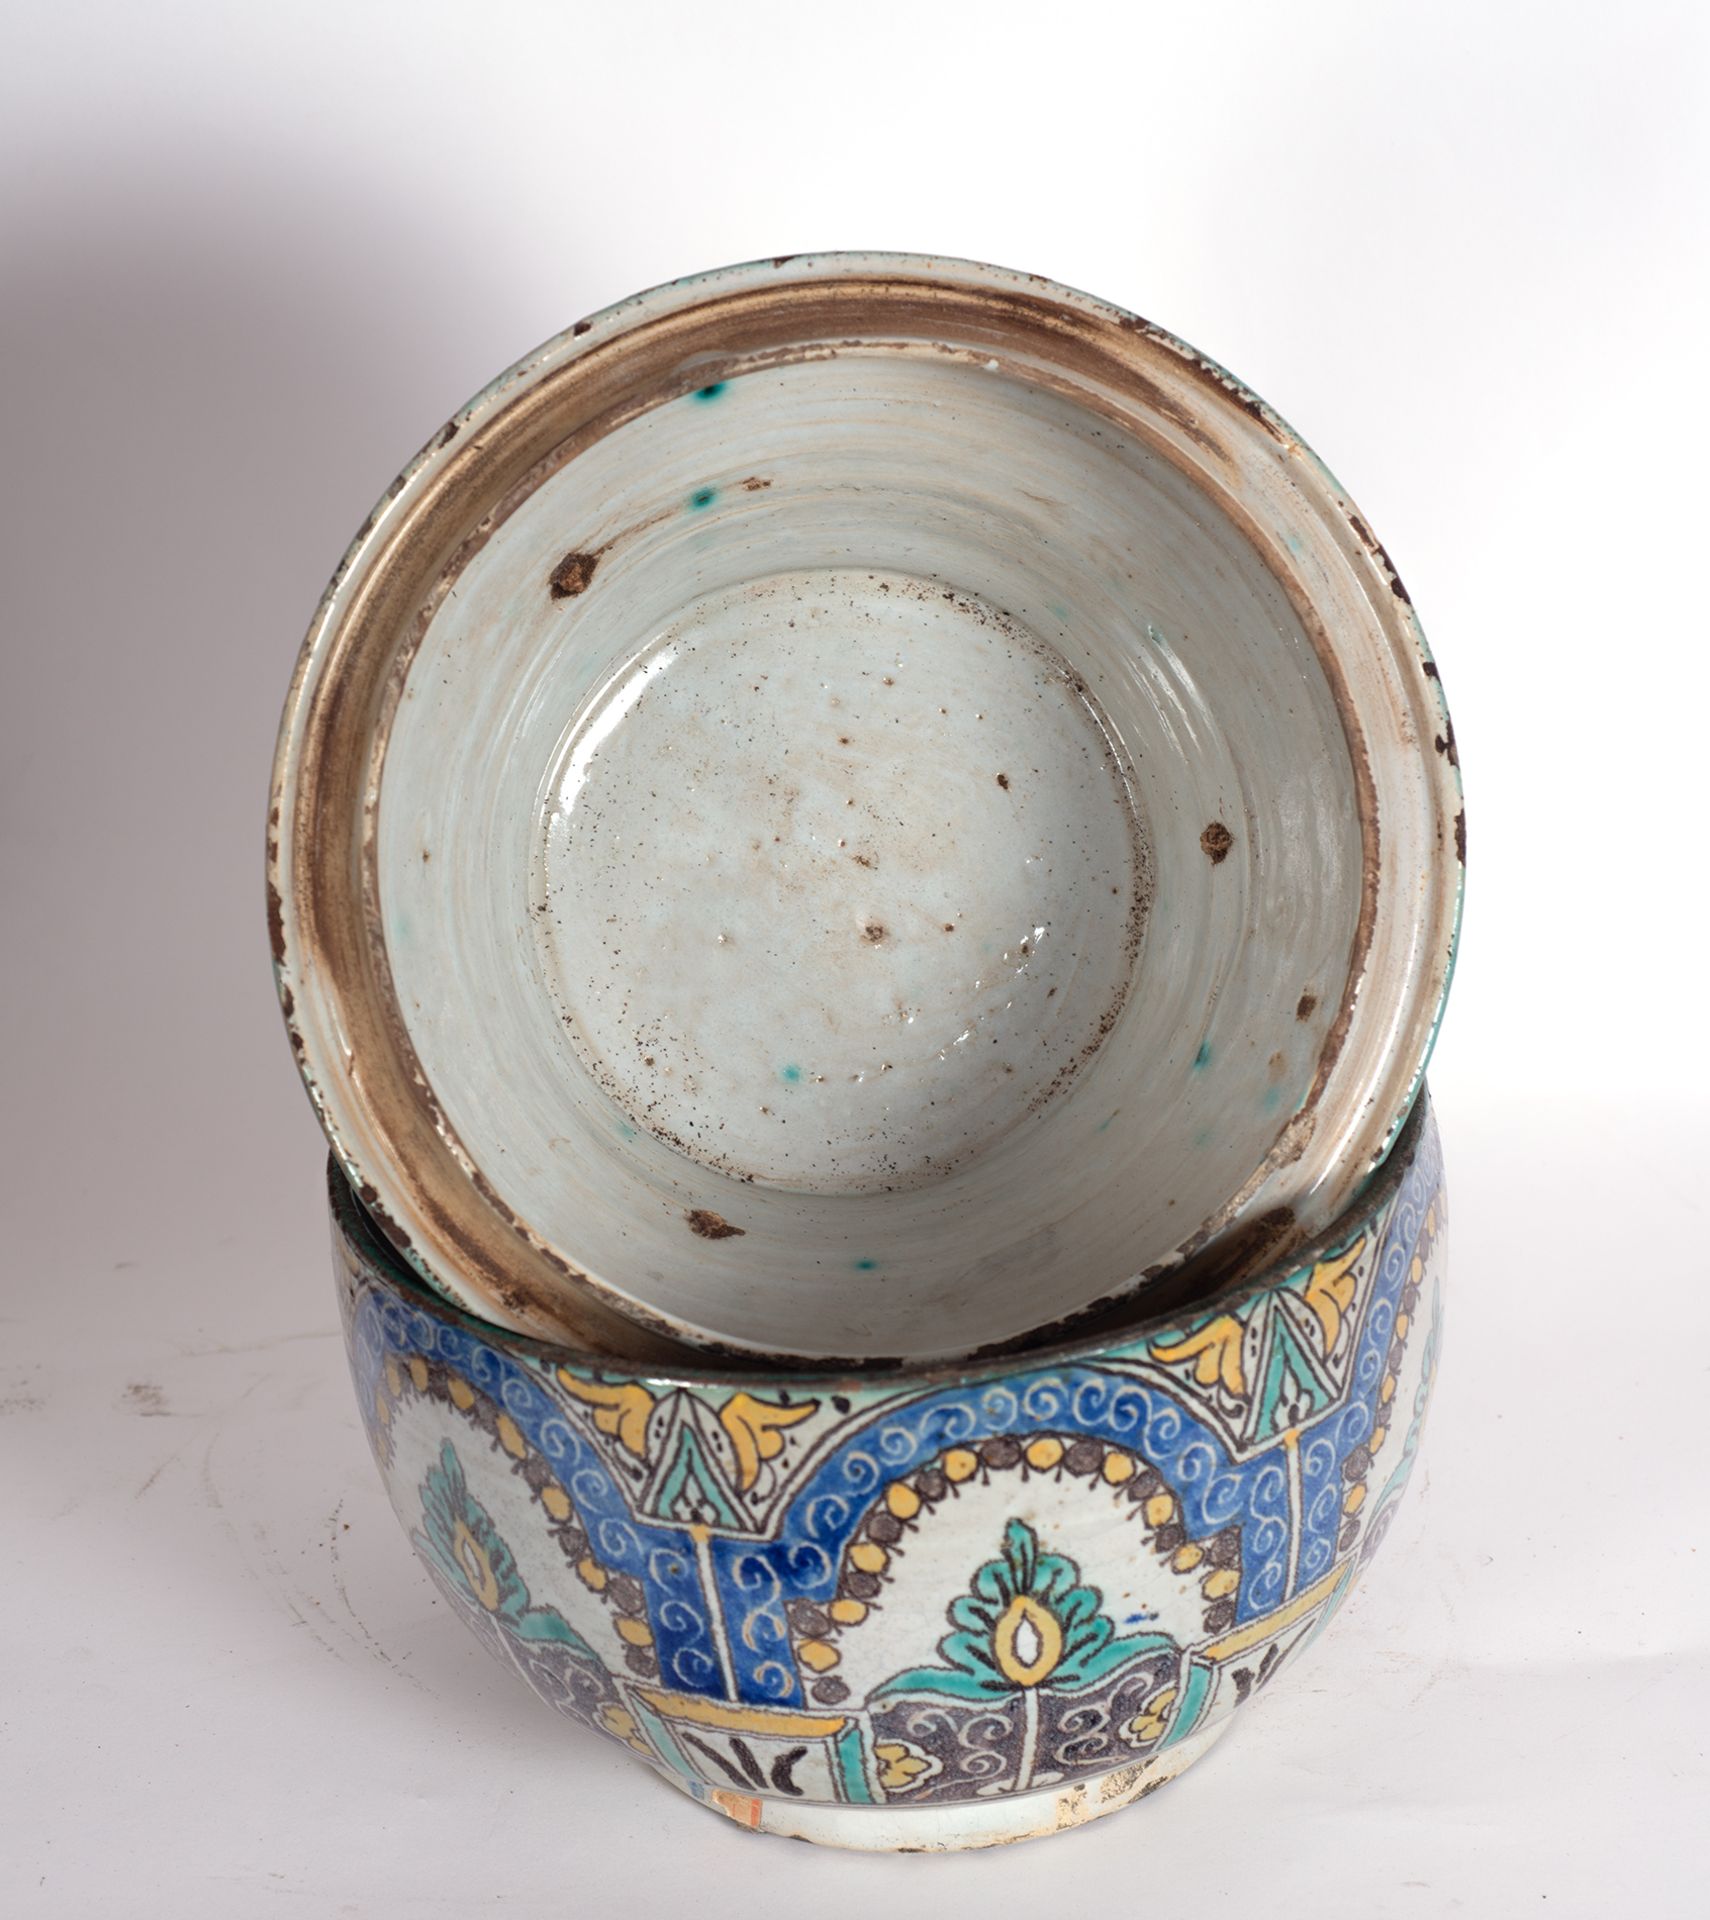 Ceramic Jobbana vessel from Fez, Morocco, 19th century - Image 2 of 6